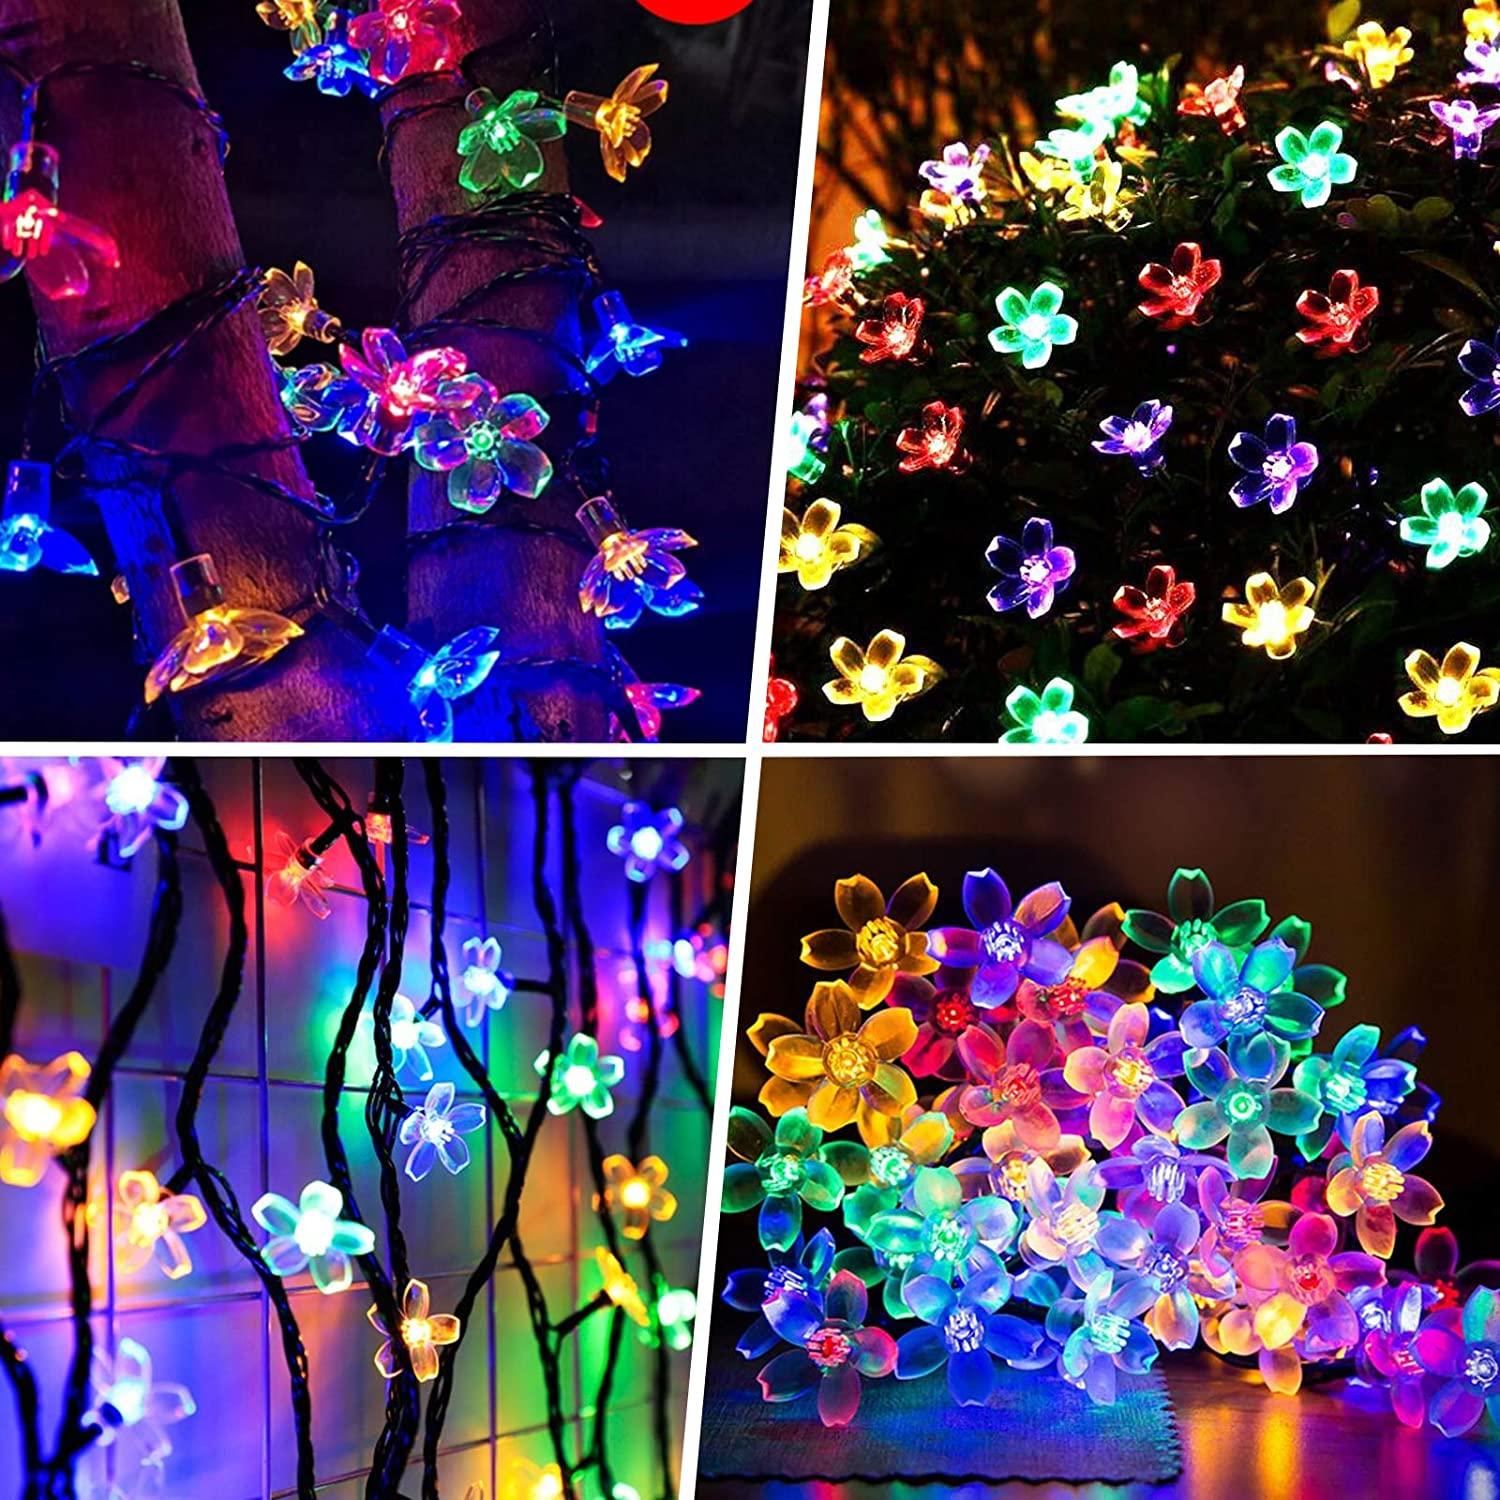 Instalatie solara 50 LED, ghirlanda luminoasa cu flori multicolor